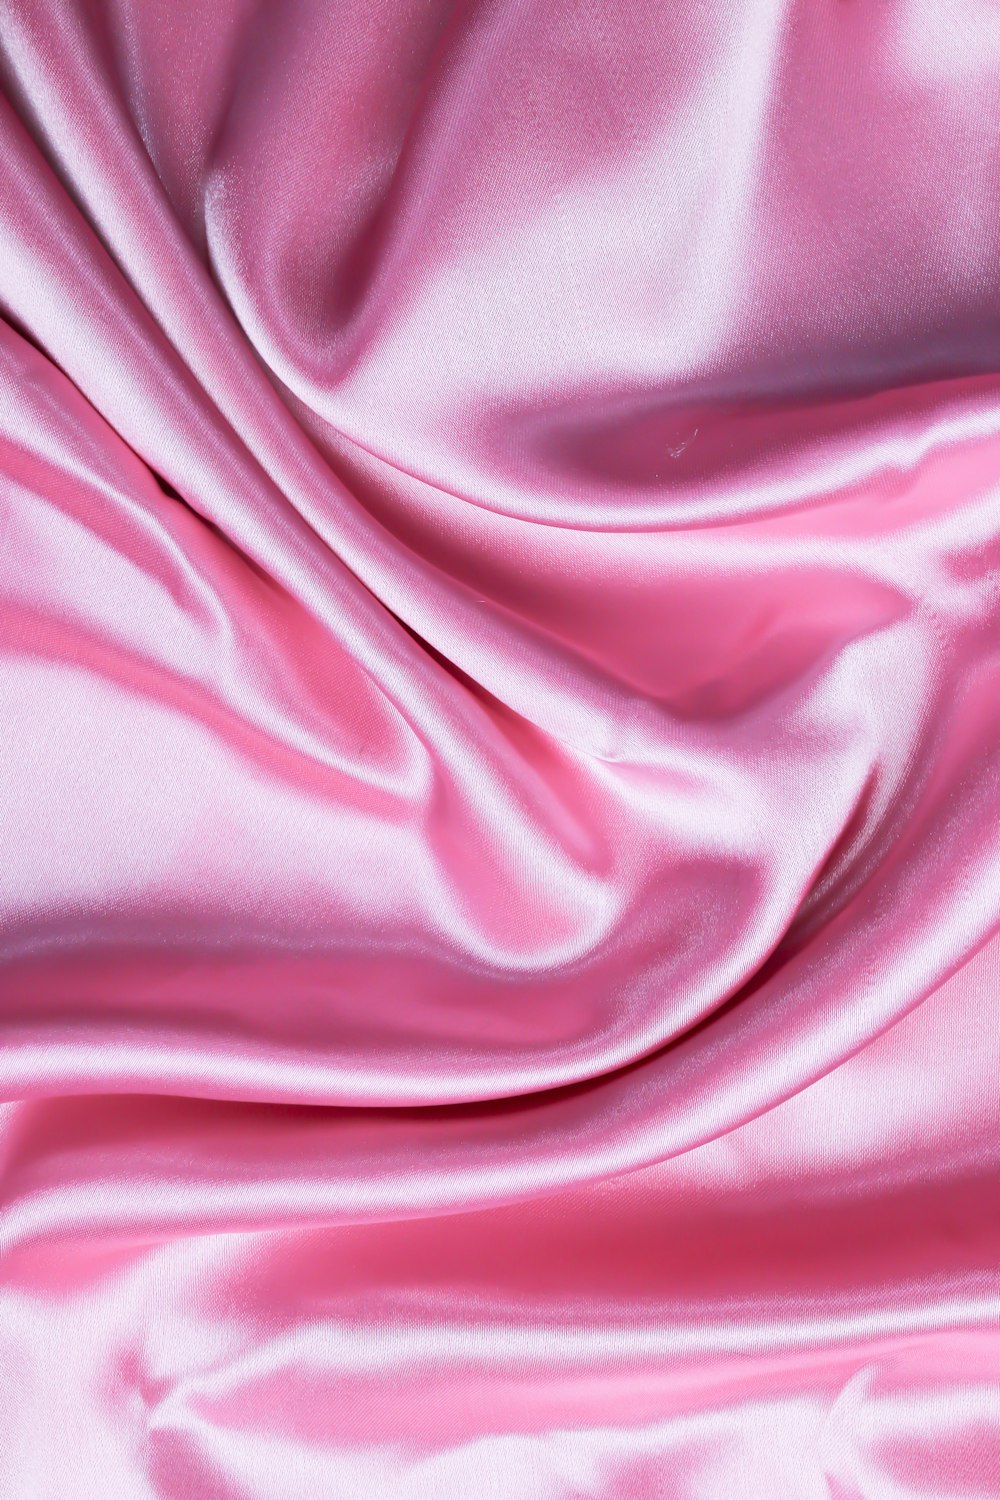 fumle Minimer Flipper Pink Silk Pictures | Download Free Images on Unsplash